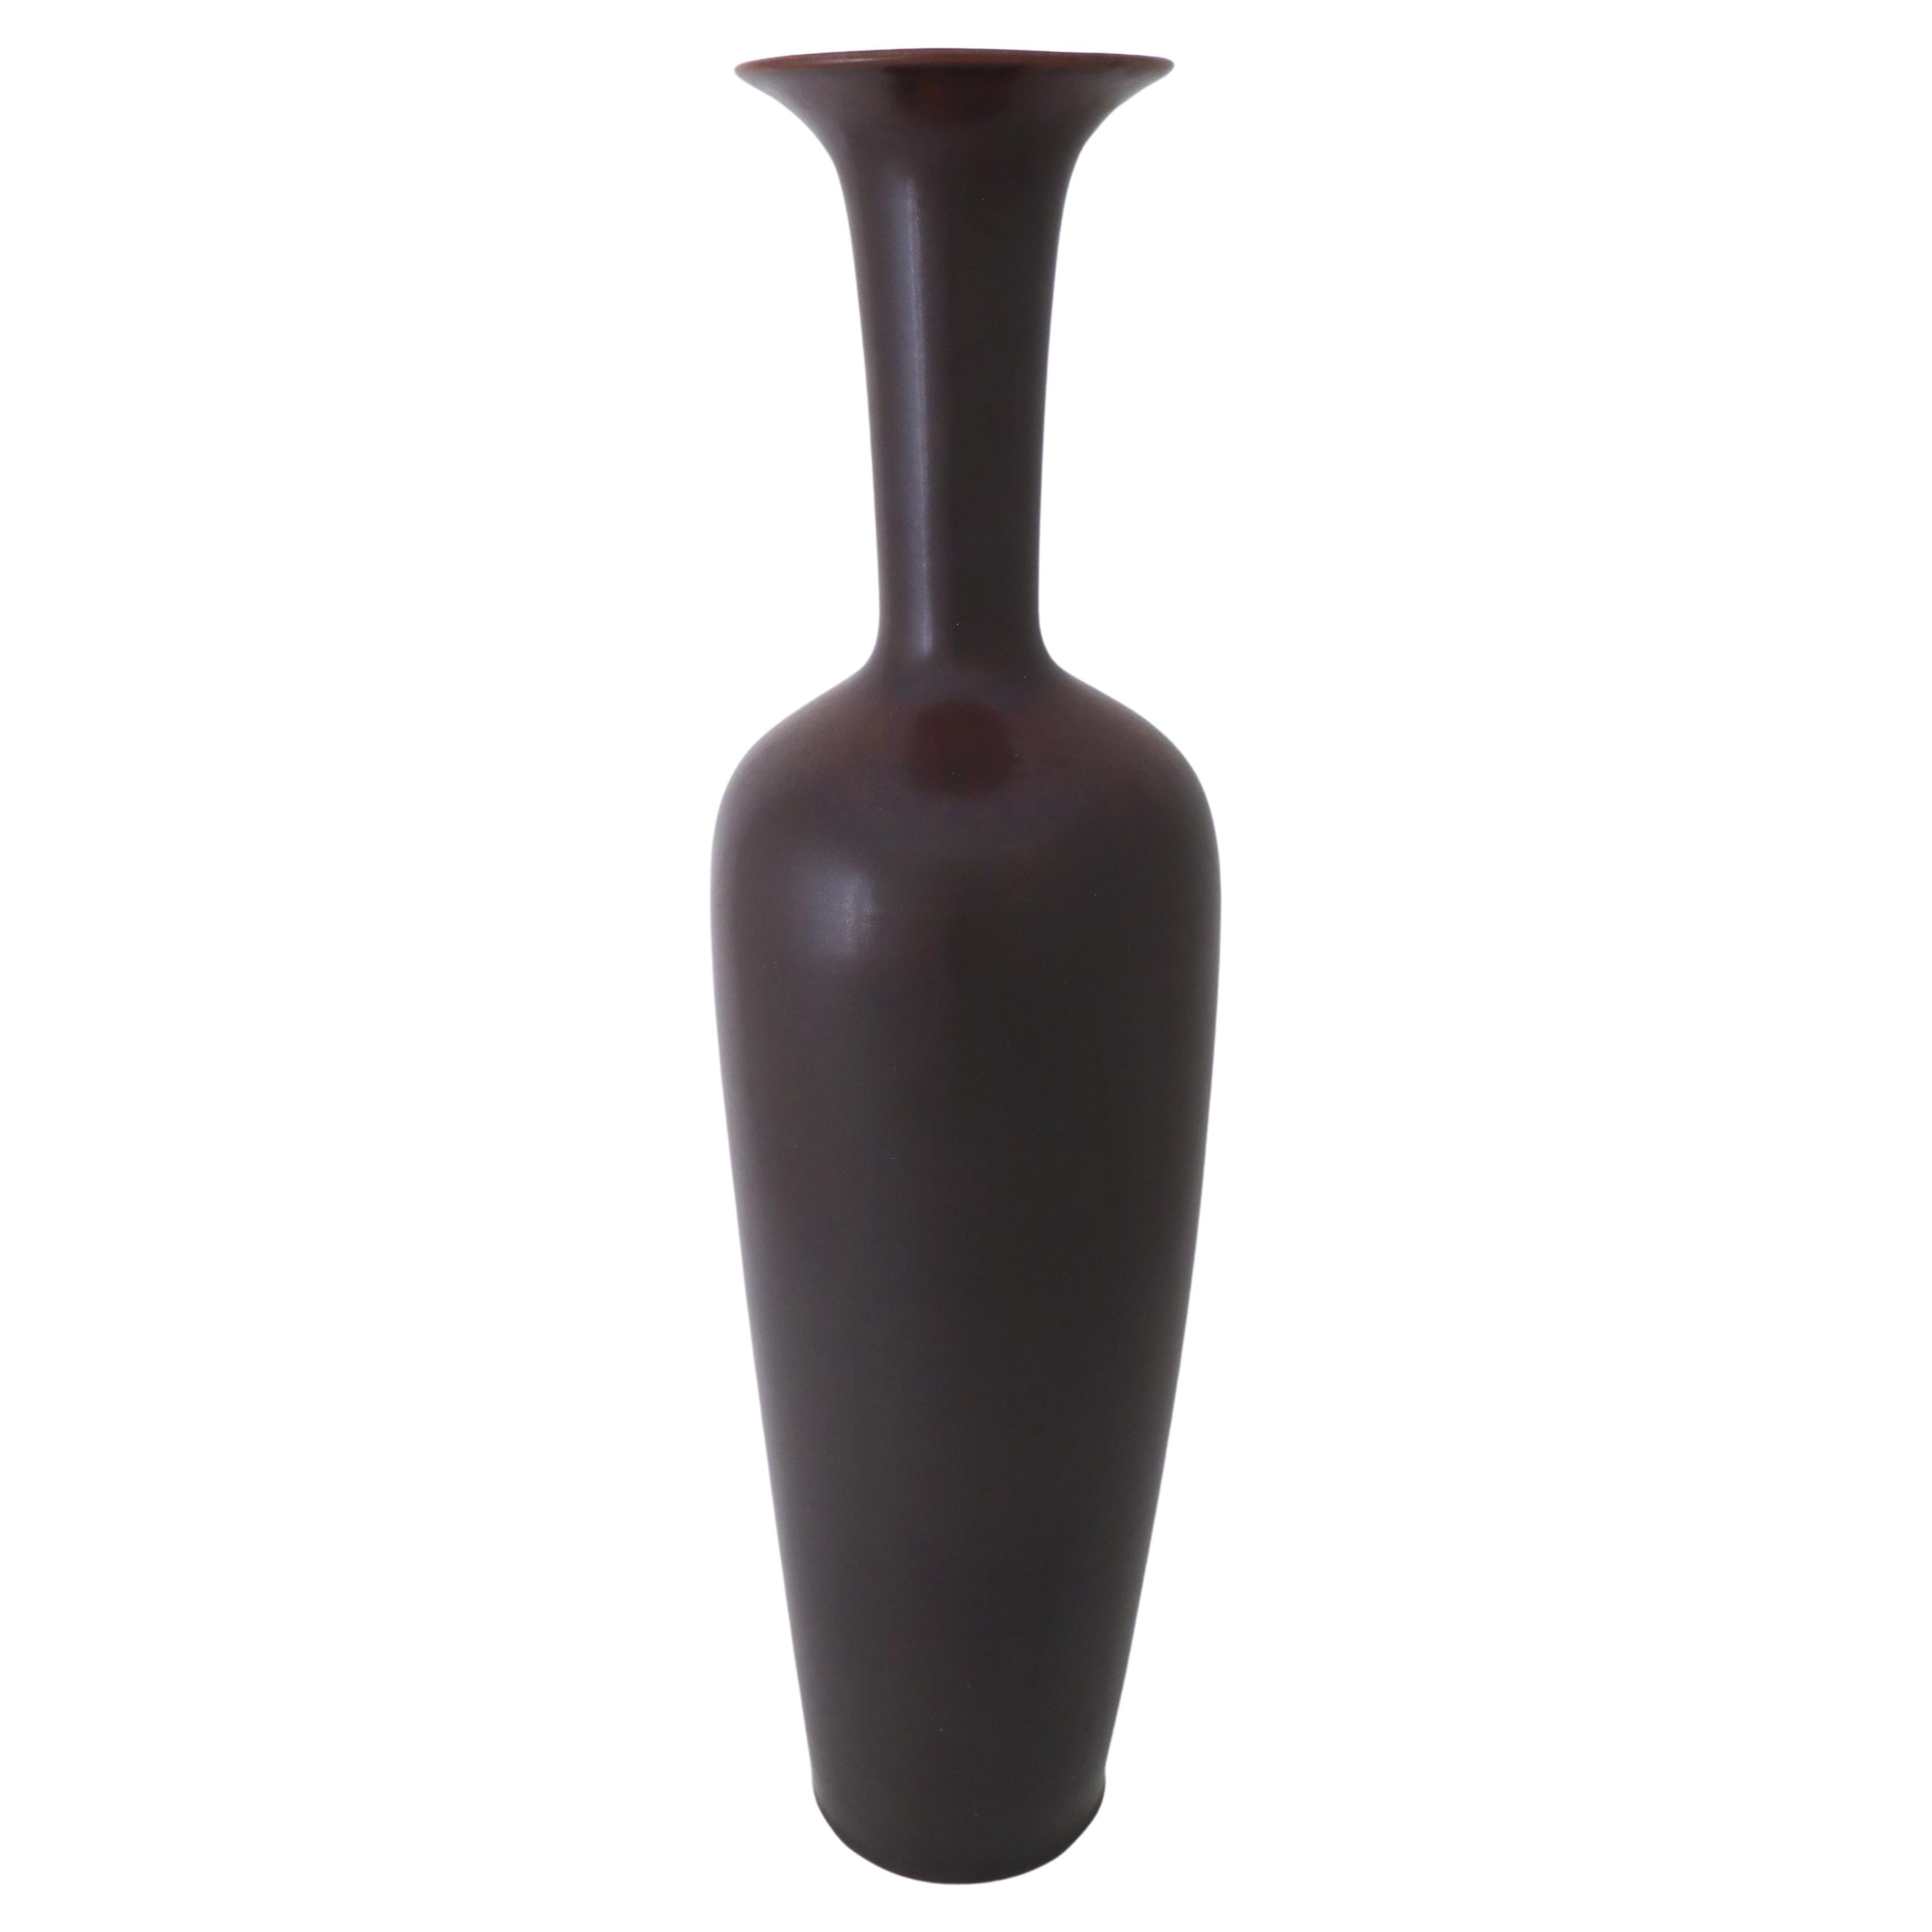 Large Ceramic Floor Vase - Dark Brown - Gunnar Nylund - Rörstrand - 20th Century